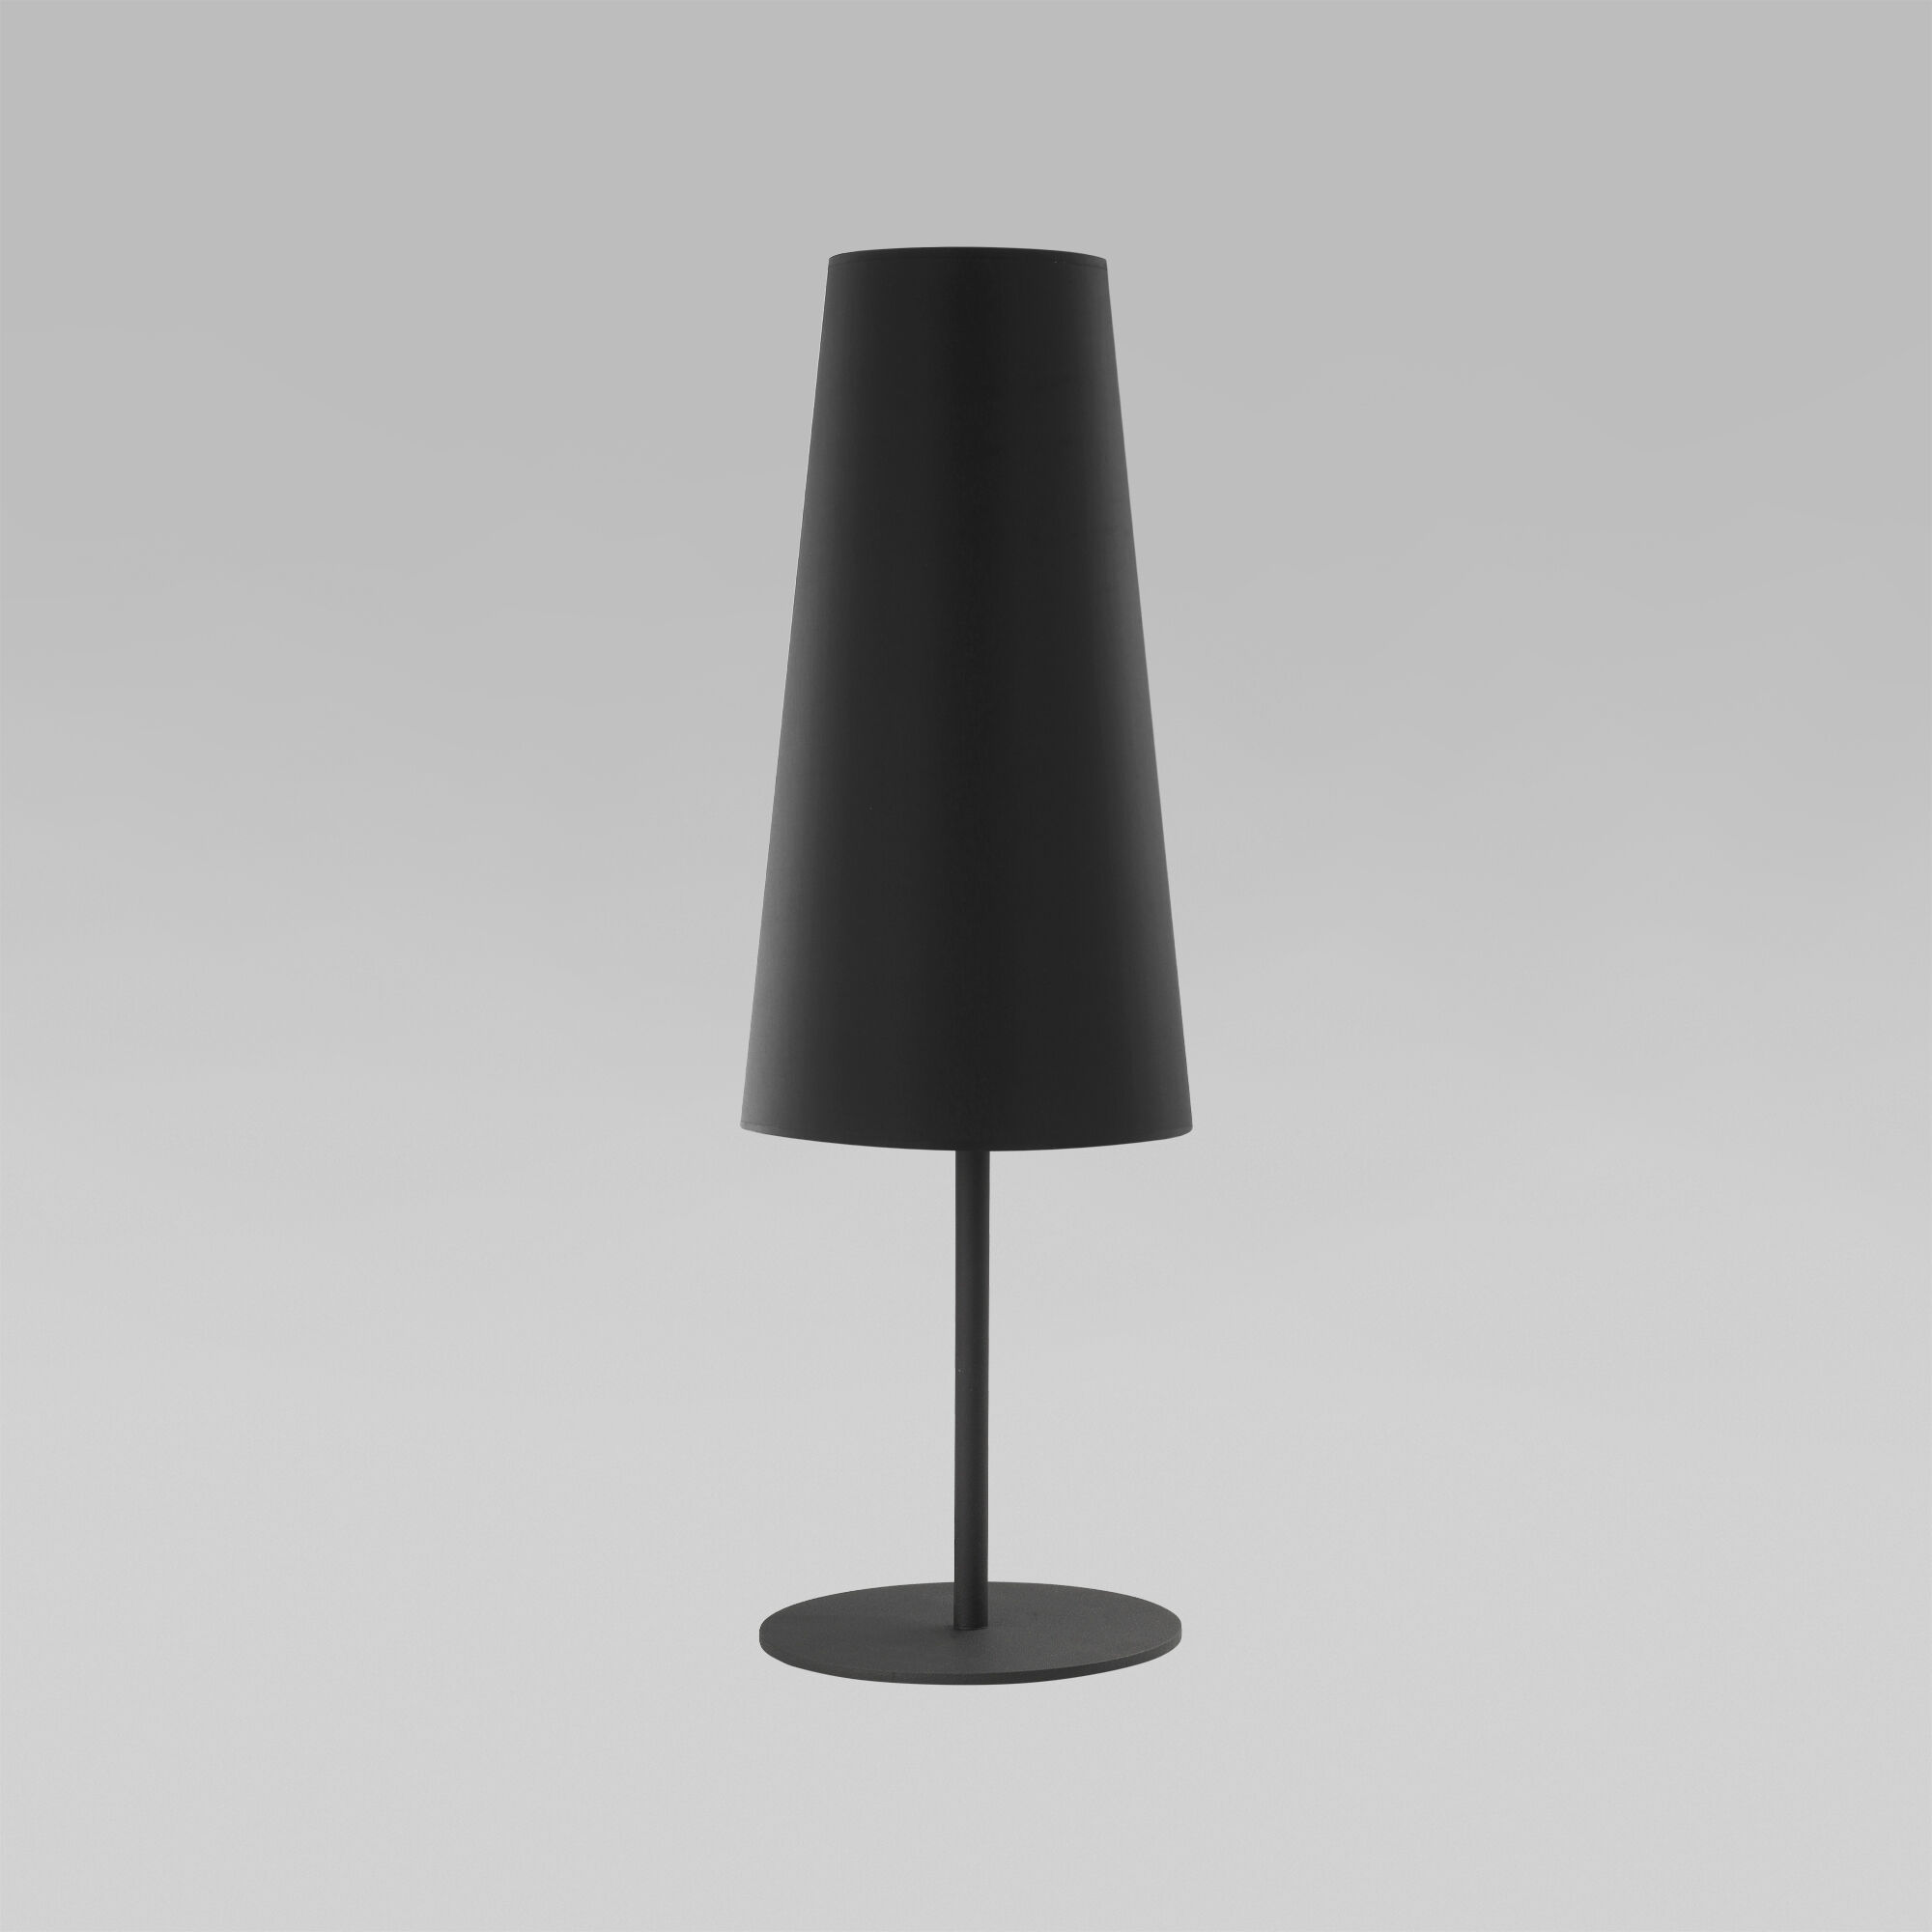 Настольная лампа с абажуром TK Lighting Umbrella 5174 Umbrella Black. Фото 1